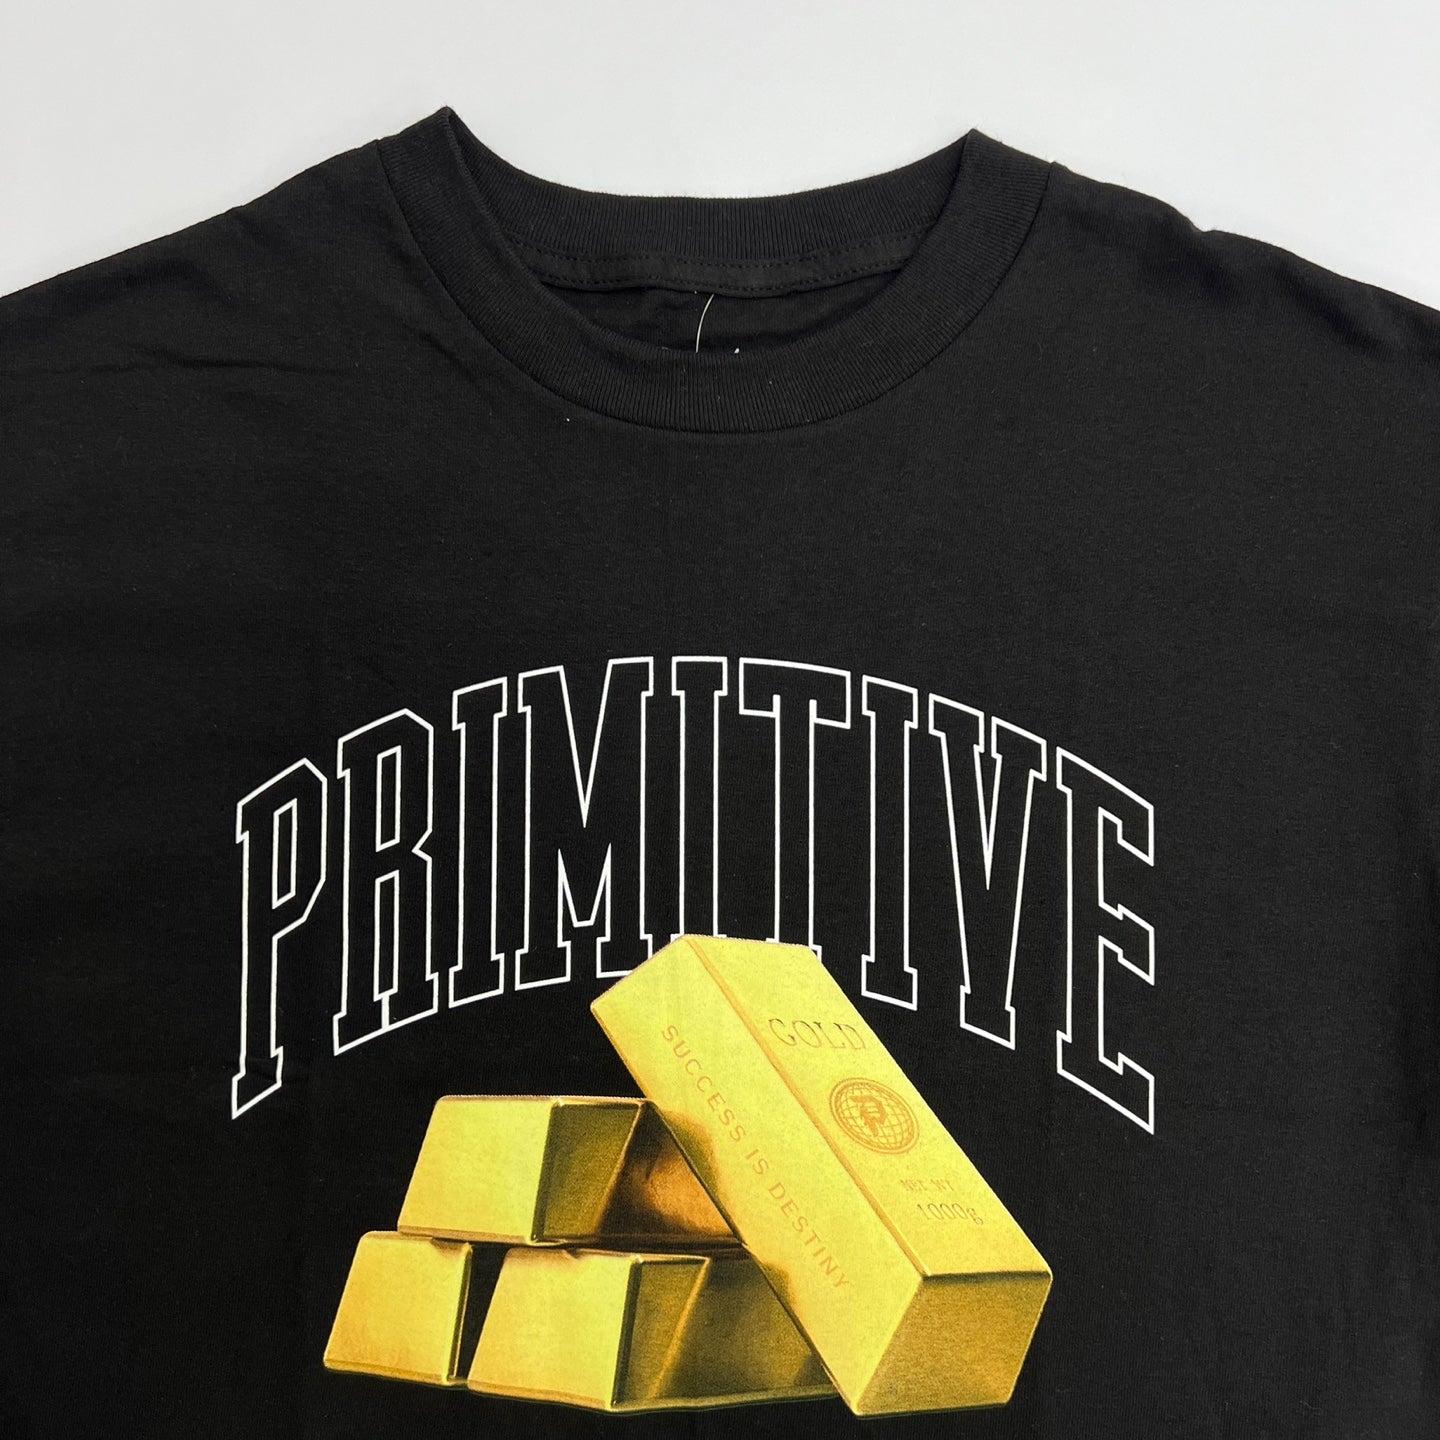 Primitive Good for Life Graphic T-Shirt - Black